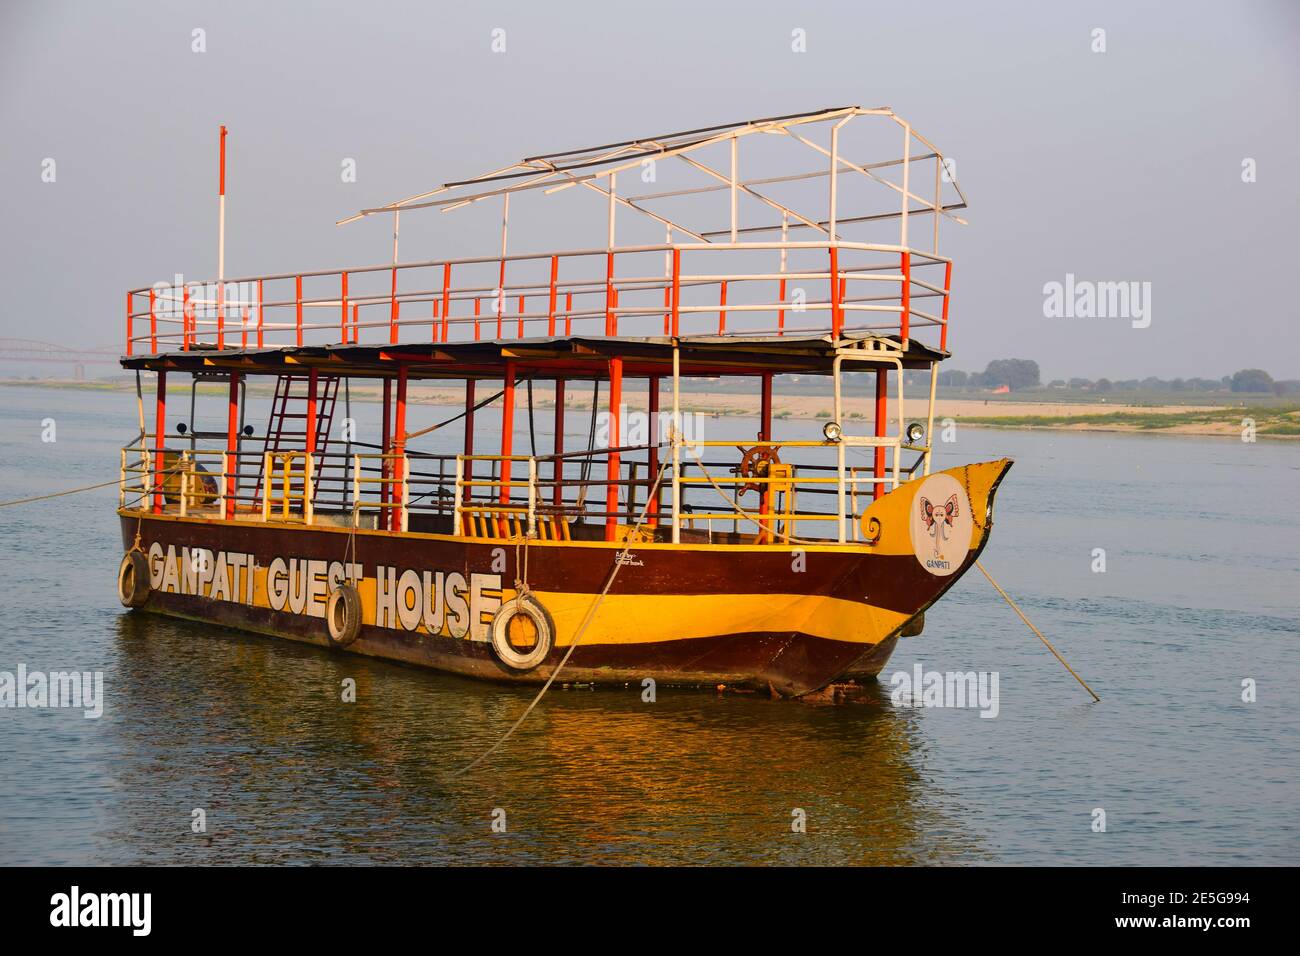 Boats, Ganpati Guest House, Ganges River, Varanasi, India Stock Photo